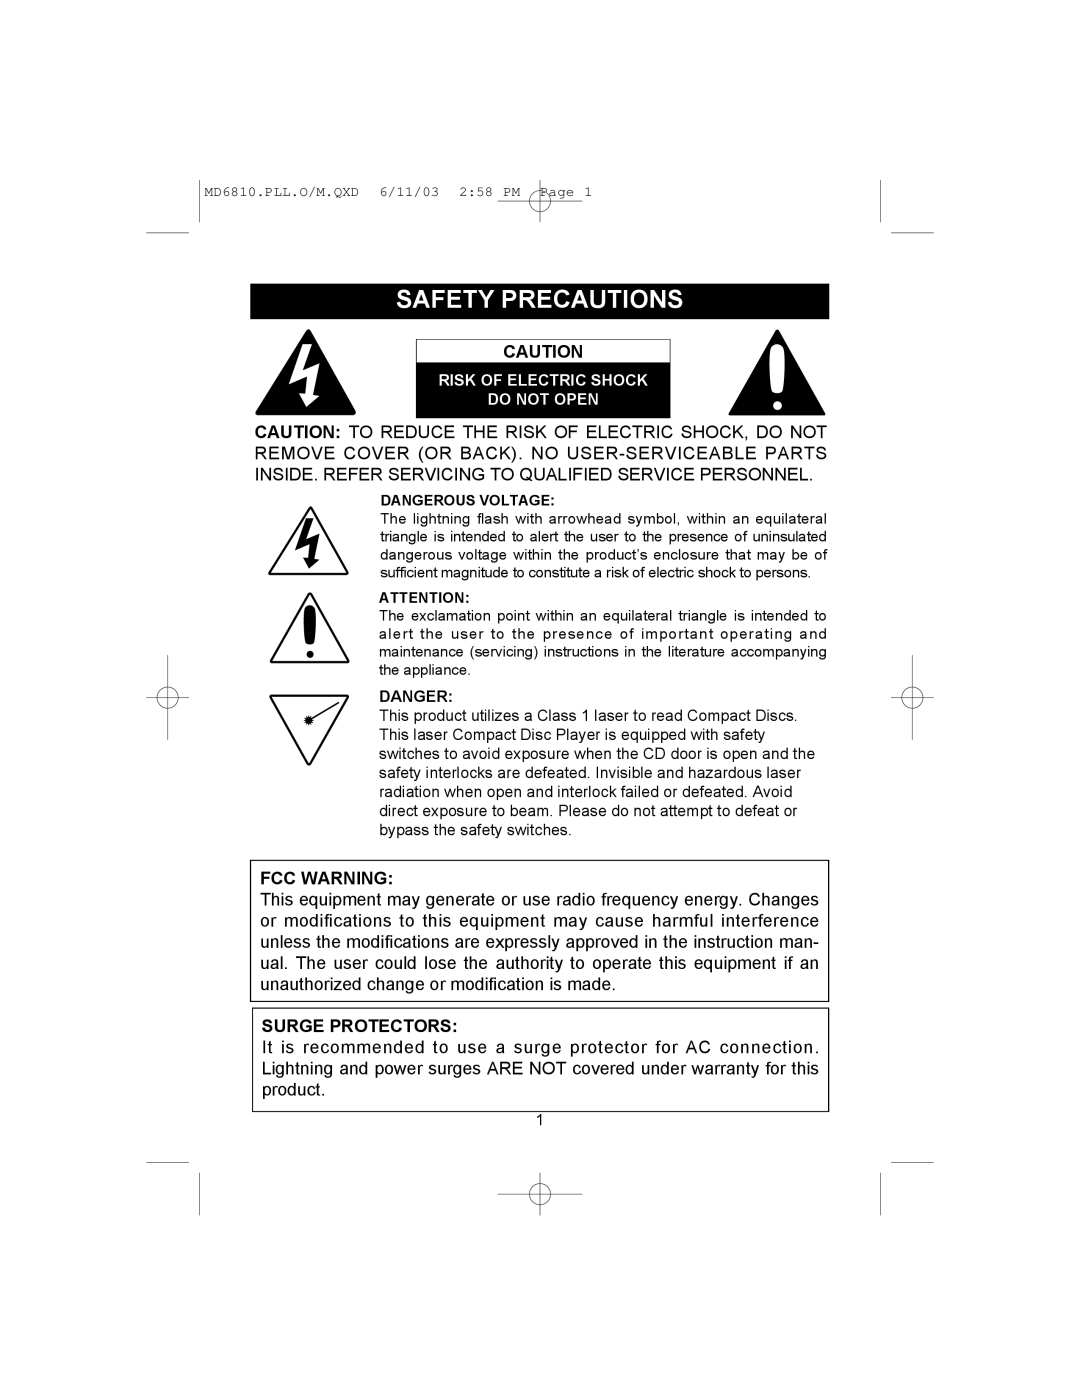 Memorex MD6810PLL manual Safety Precautions, Fcc Warning, Surge Protectors 